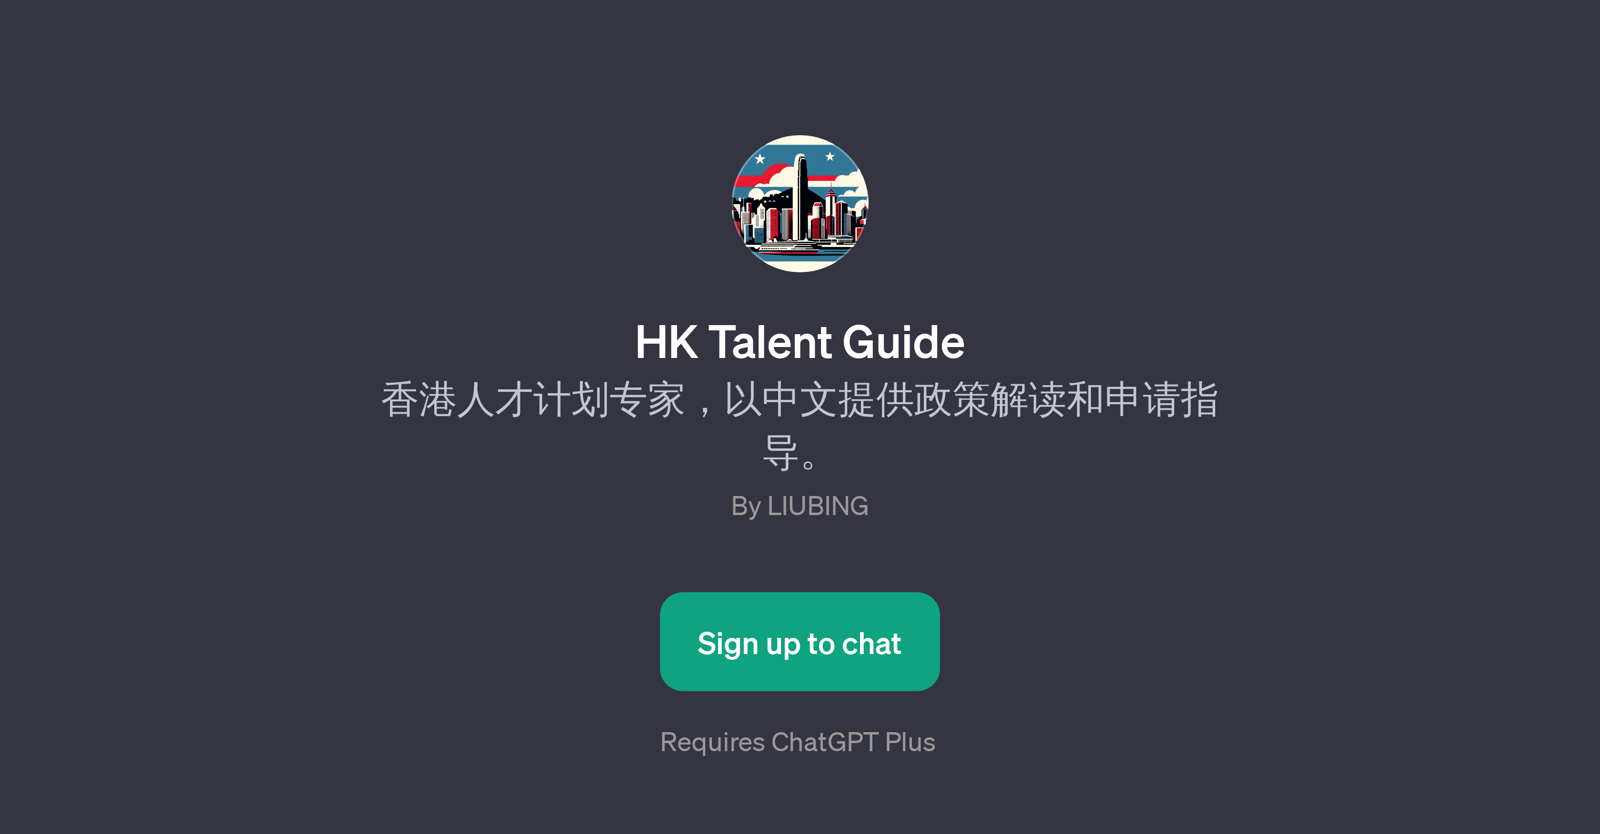 HK Talent Guide website